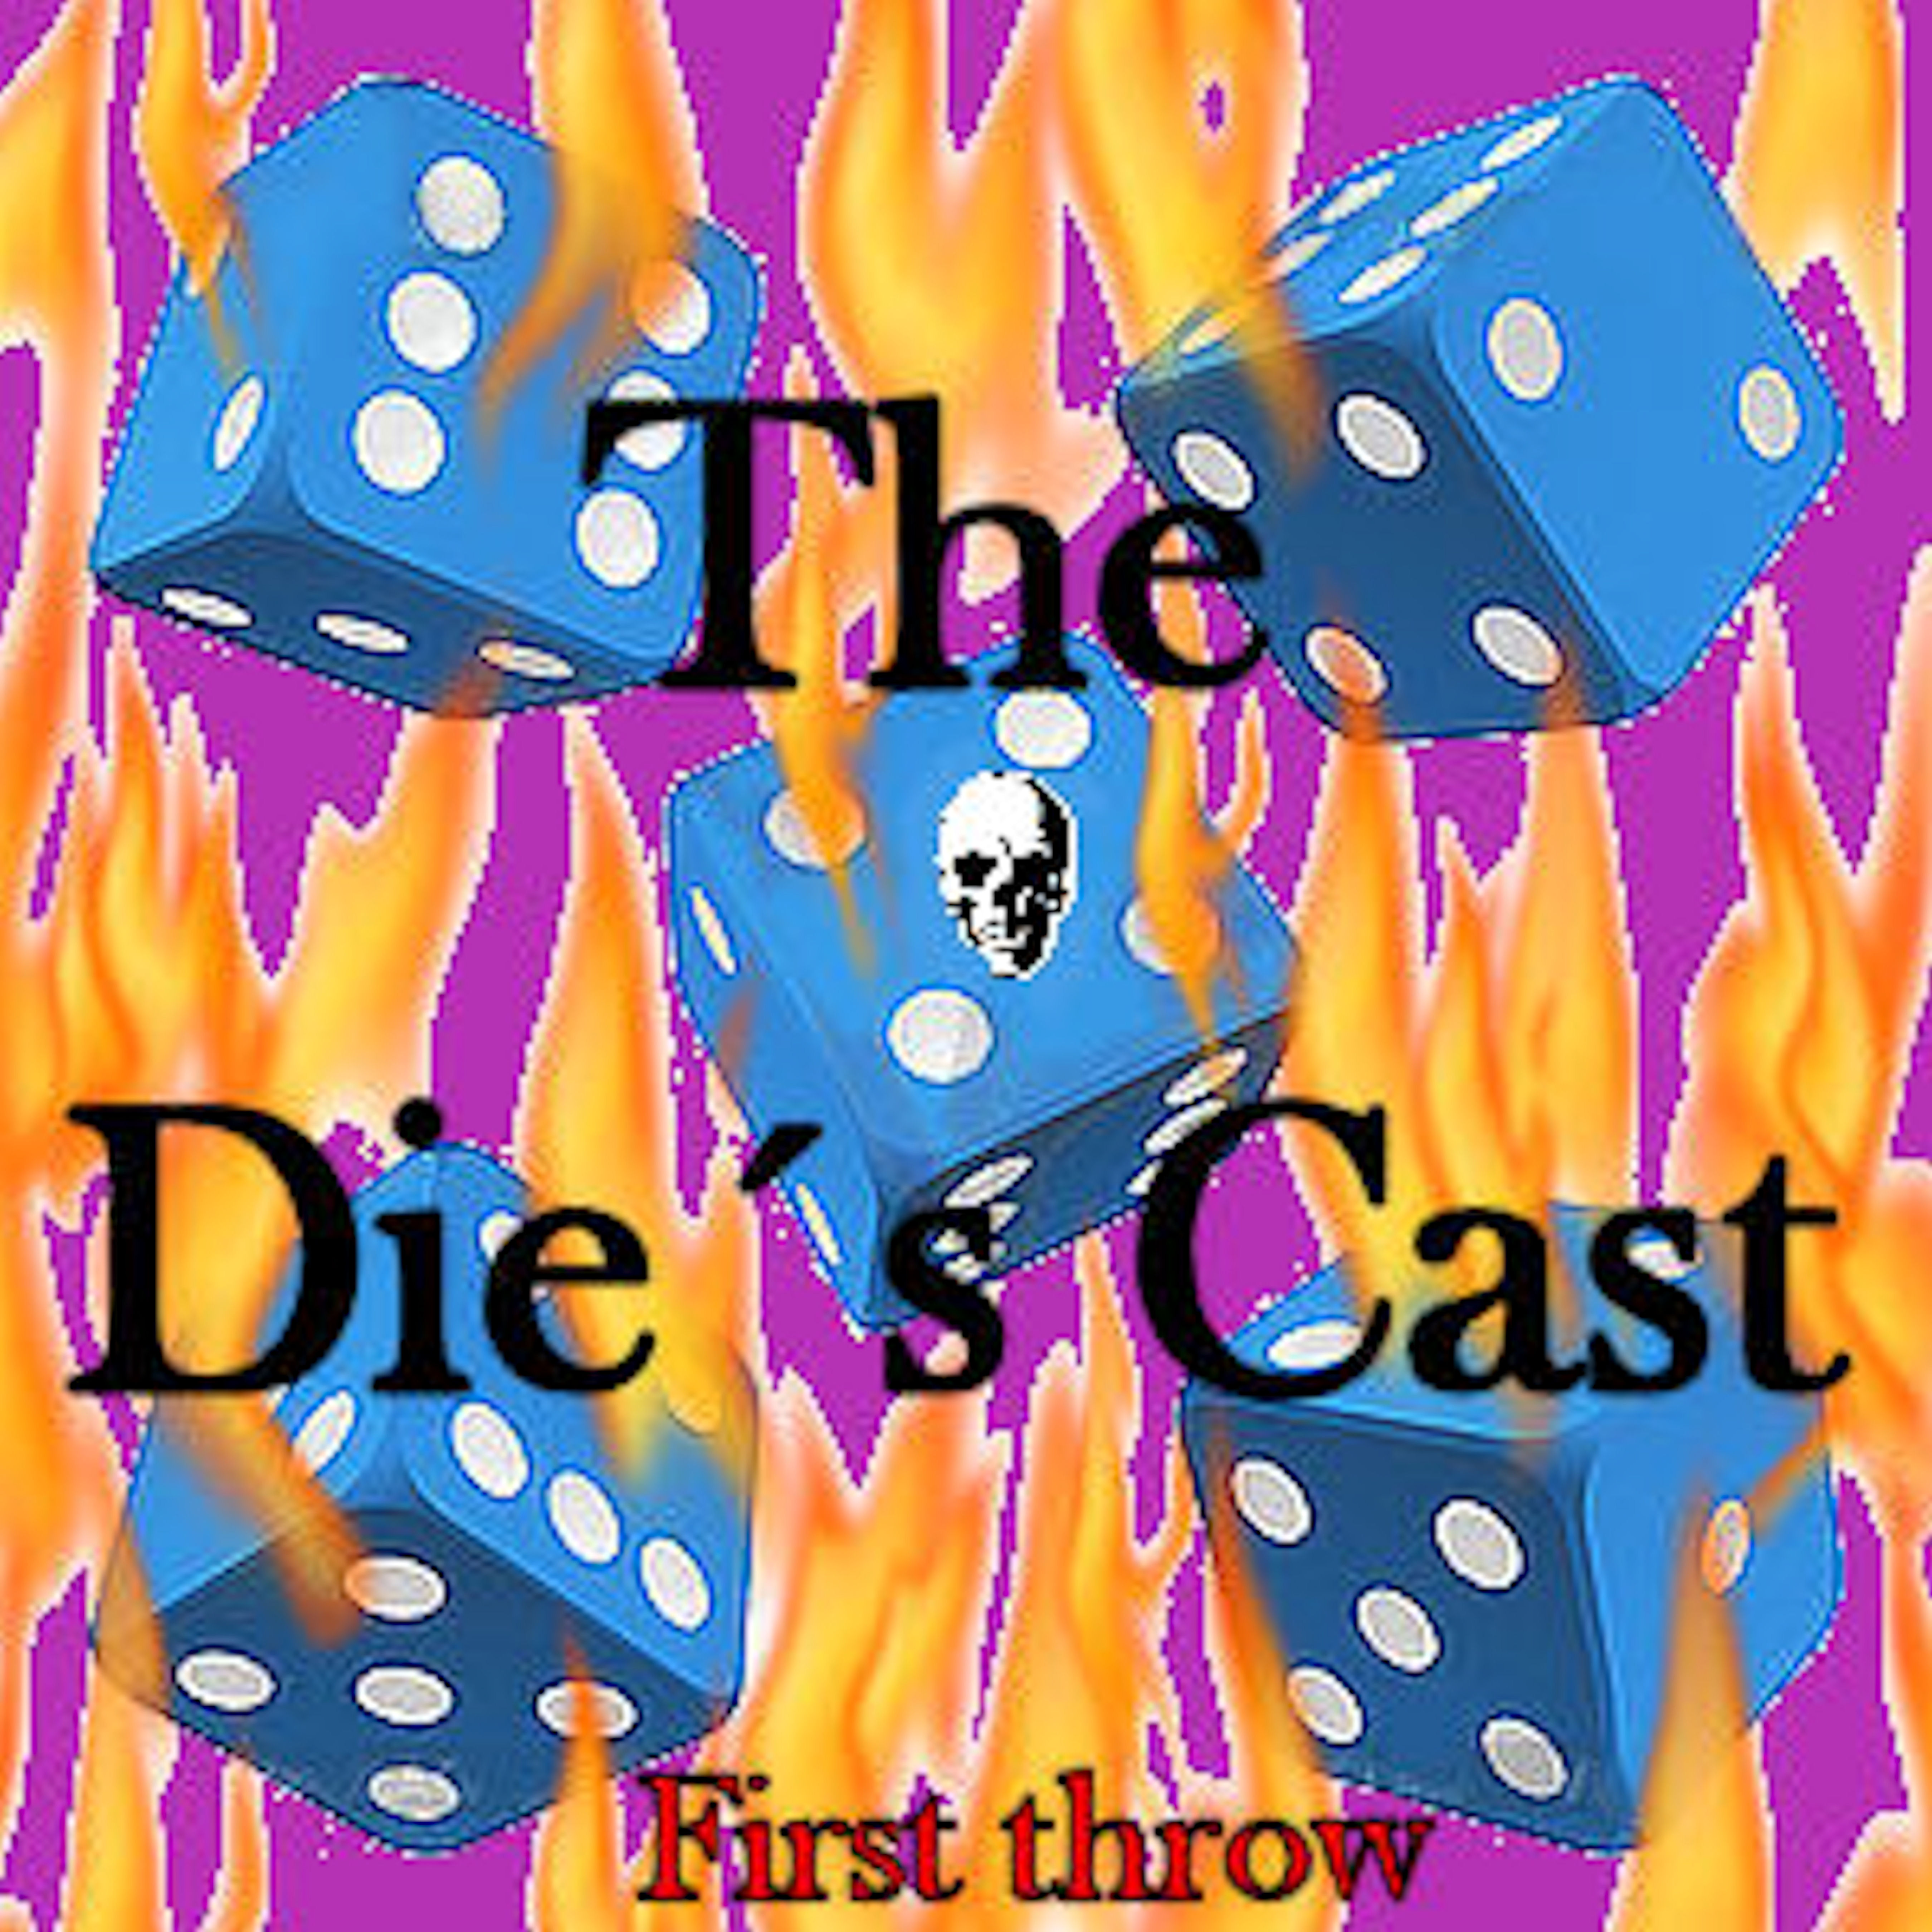 The Dies Cast